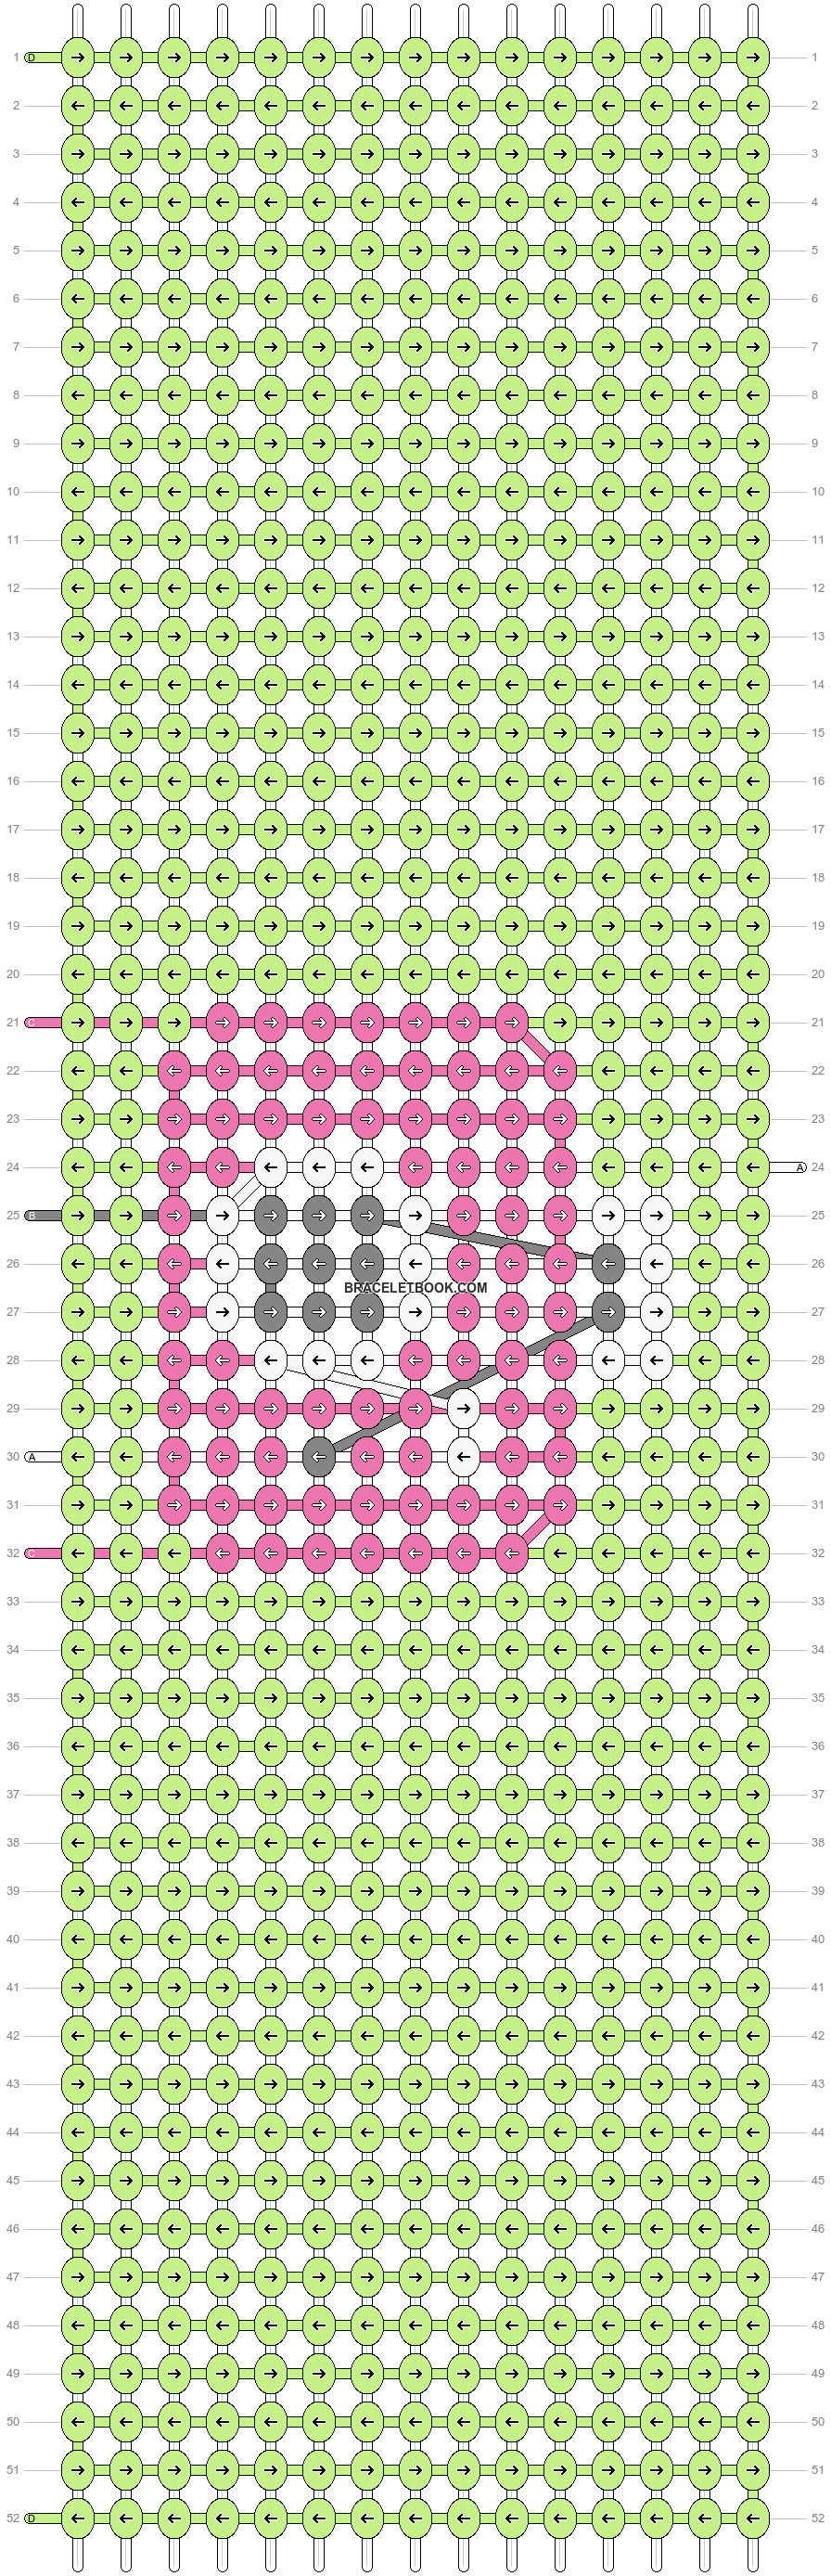 Alpha pattern #62182 variation #113017 pattern